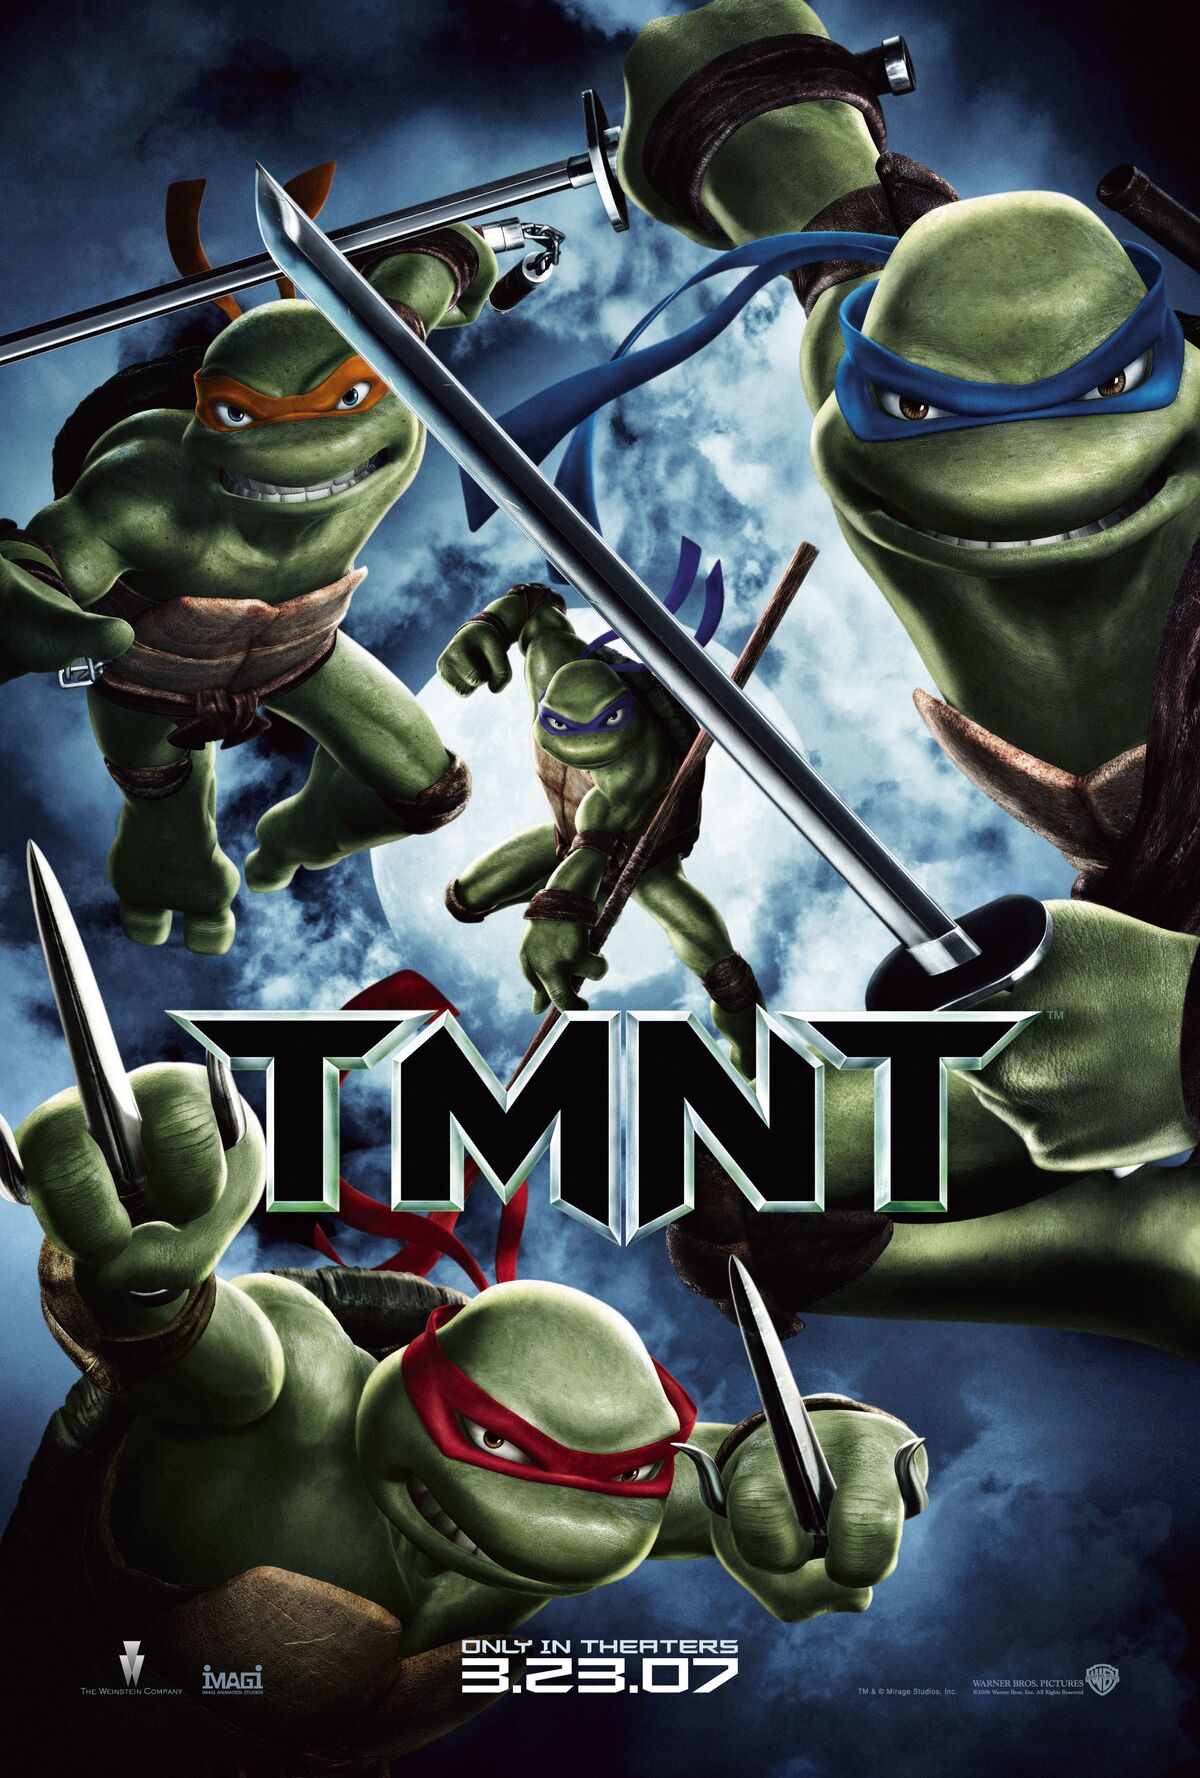 Teenage Mutant Ninja Turtles Watch In English